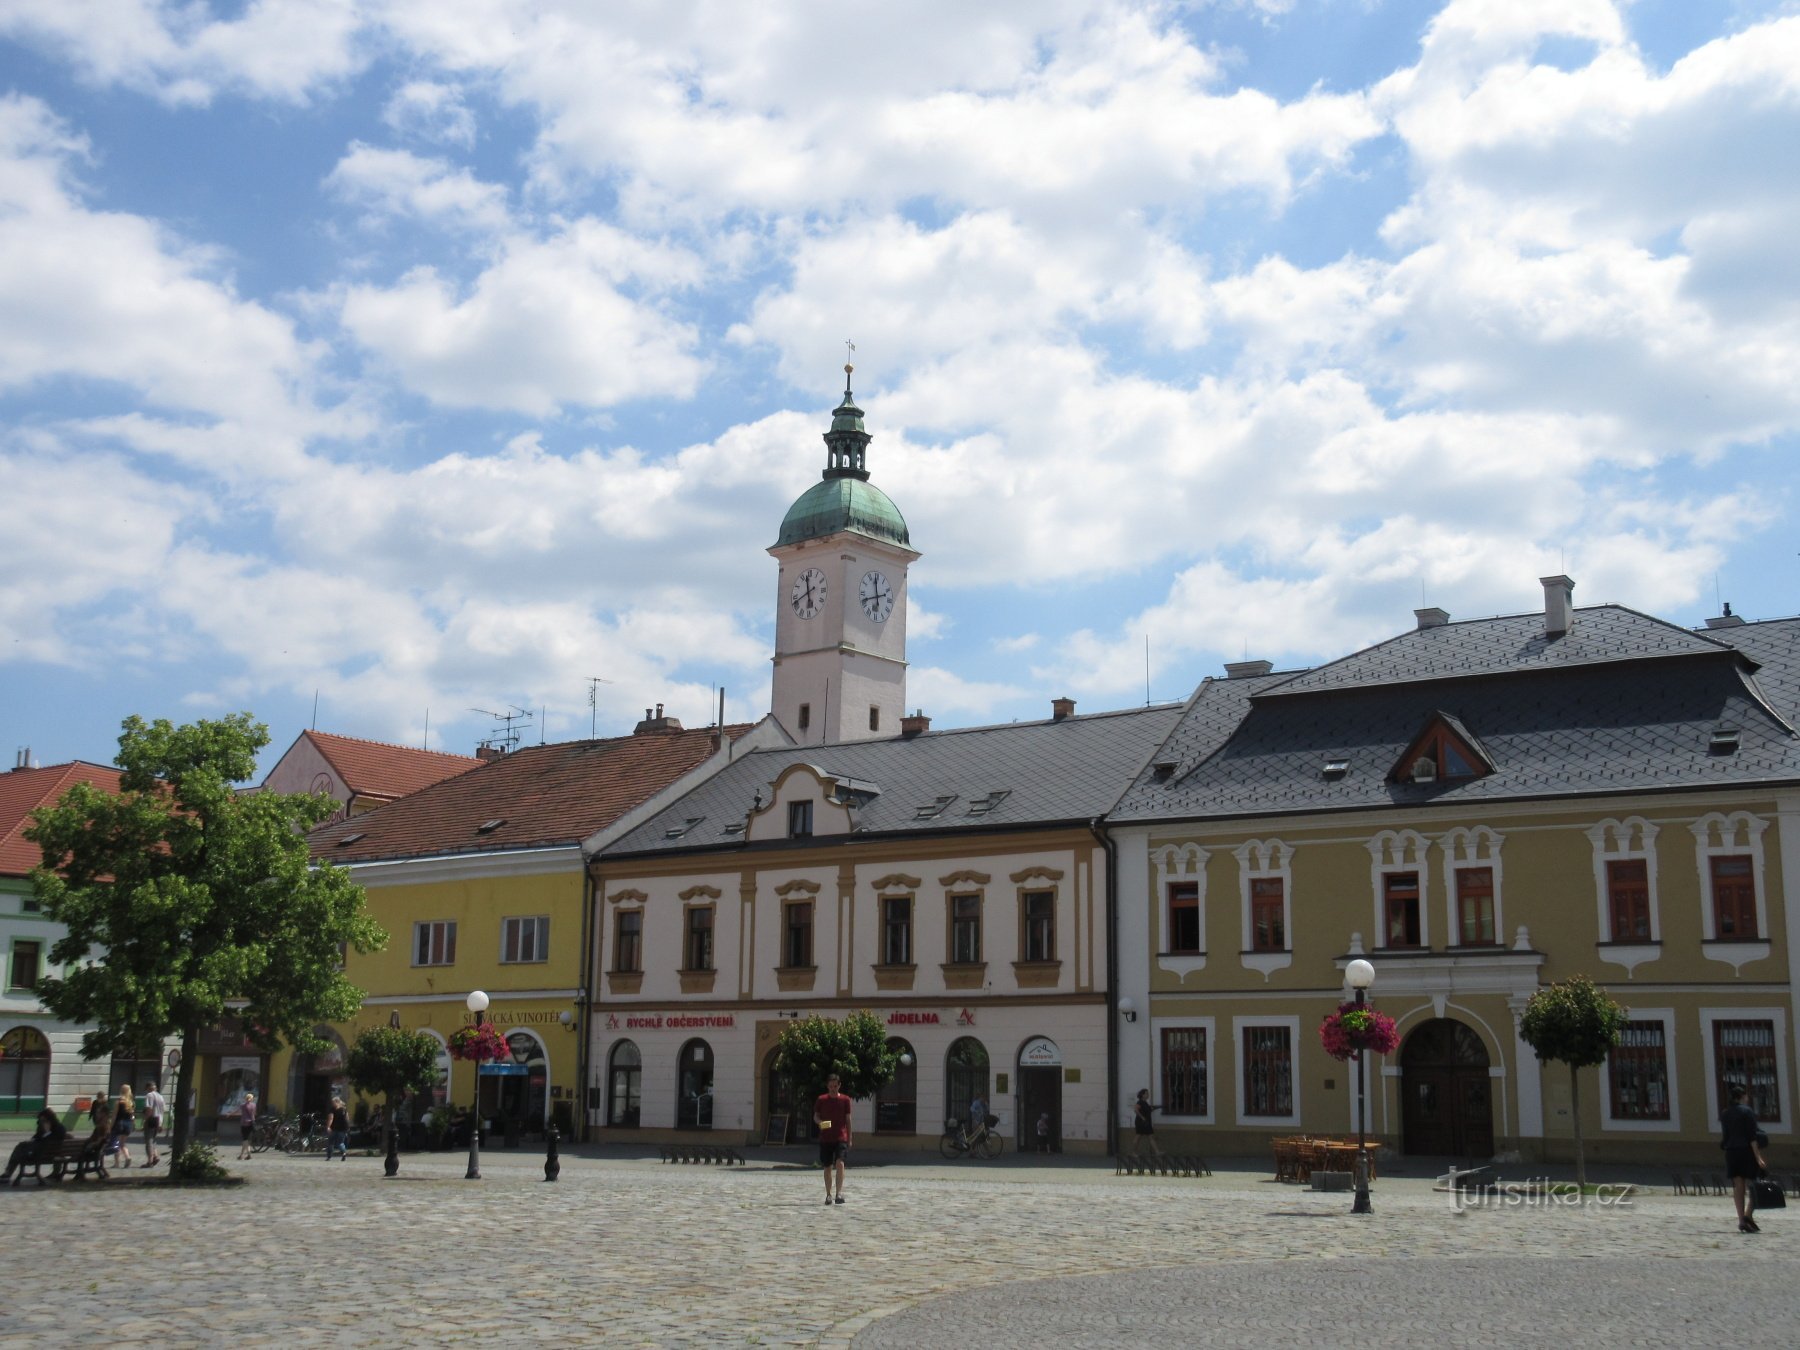 Mariánské náměstí - aan de rechterkant is het huis U Sovy, achter de toren van het oude stadhuis